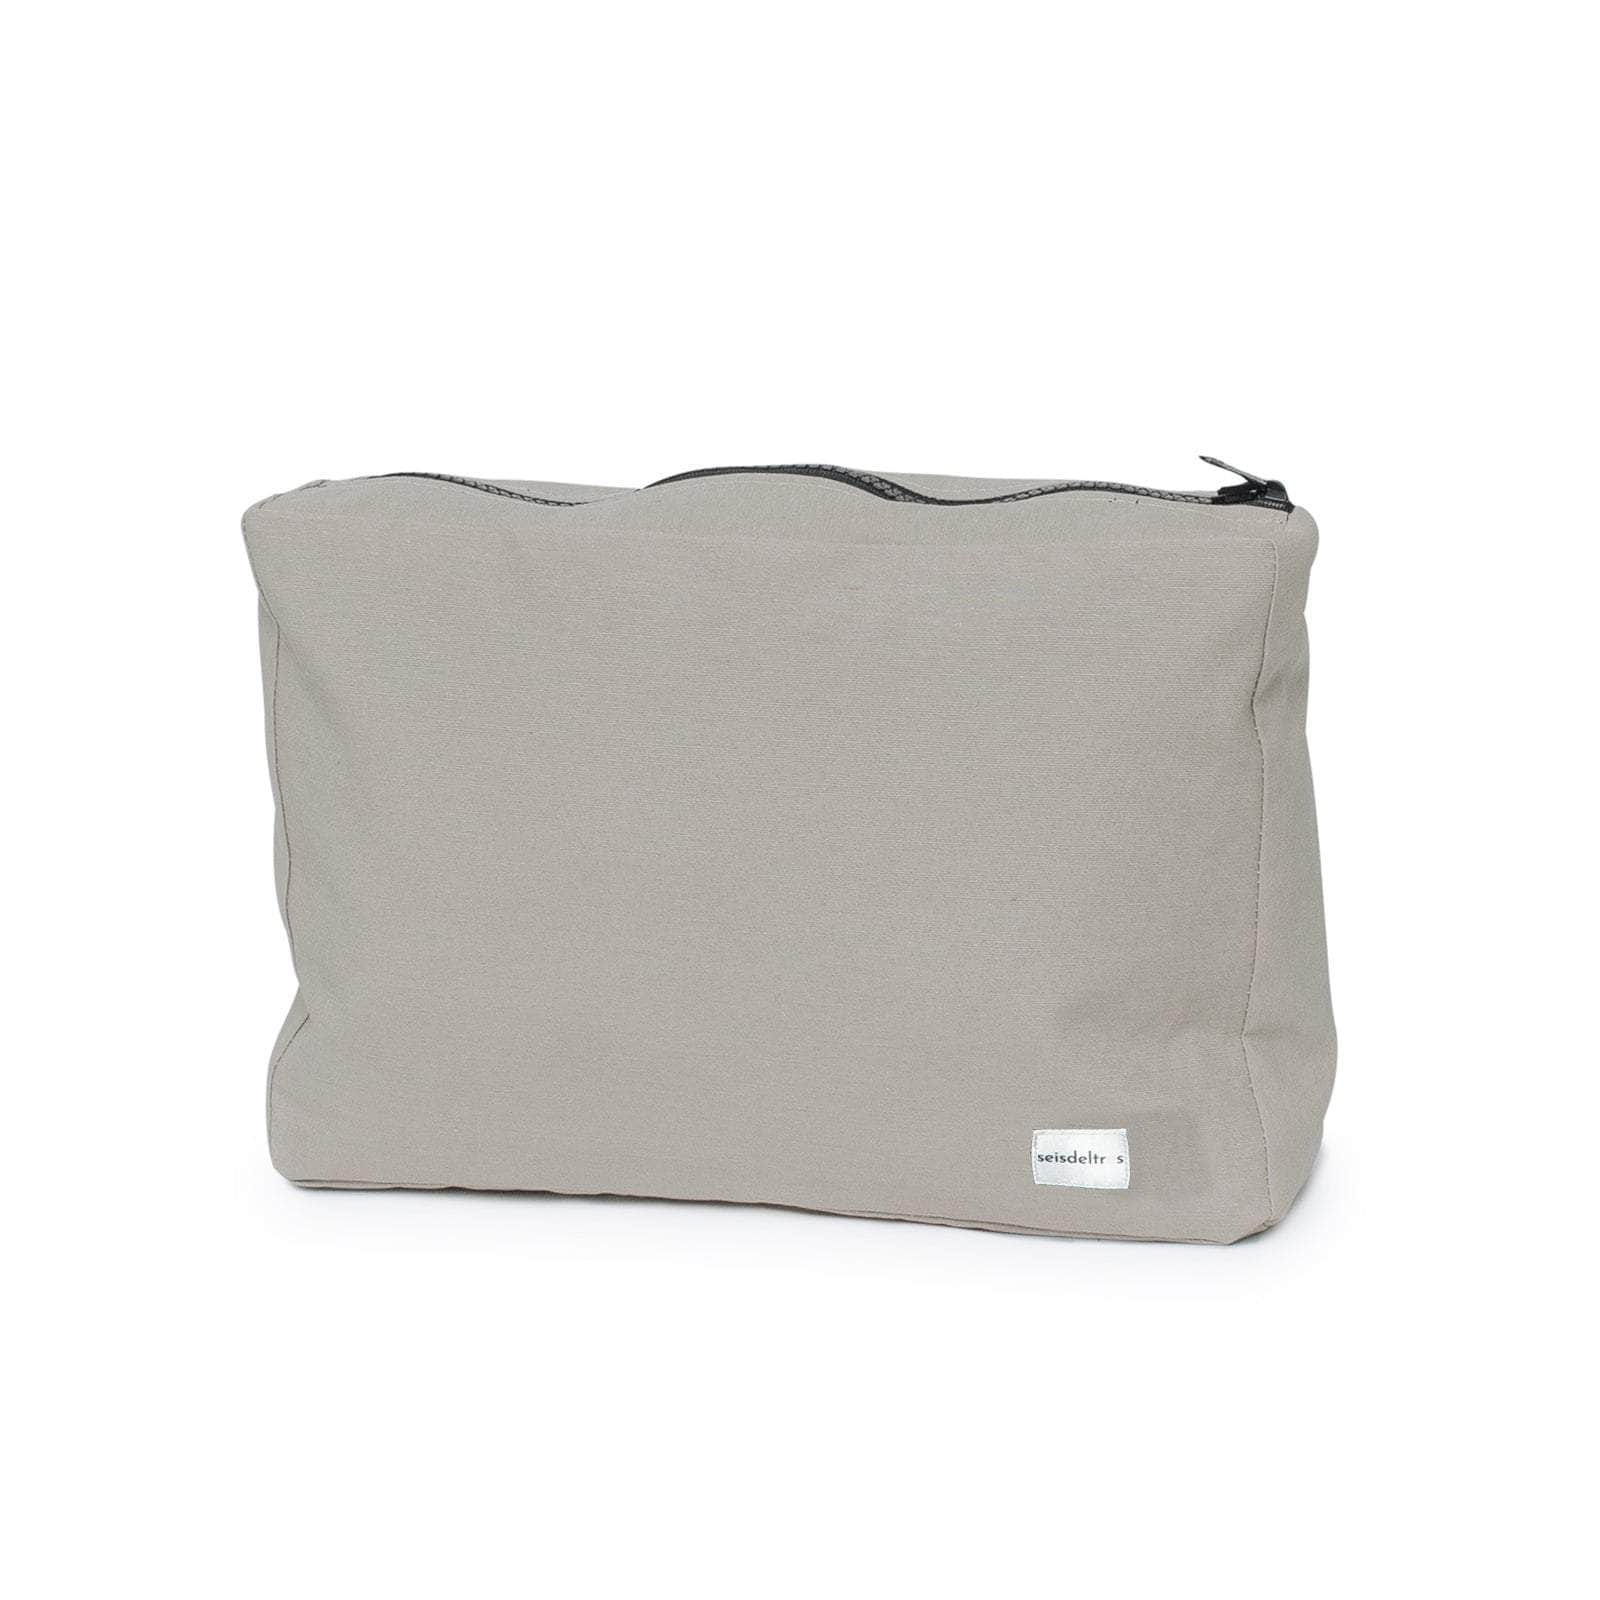 pack mybigbag Pack completo - bolsa L, bolsa XL y neceser - Negro/Piedra